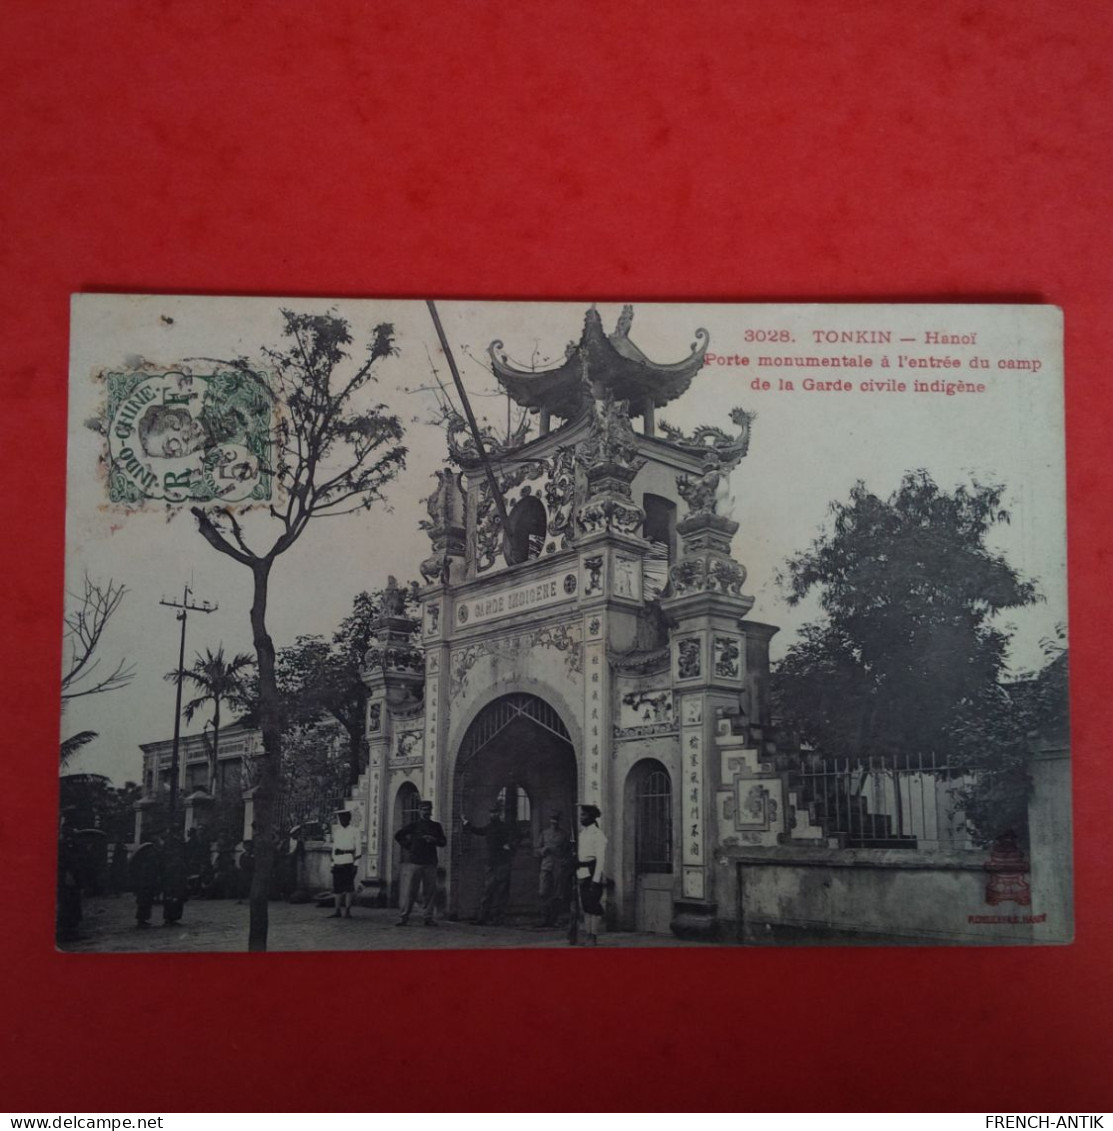 HANOI PORTE MONUMENTALE A L ENTREE DU CAMP DE LA GARDE CIVILE INDIGENE - Vietnam